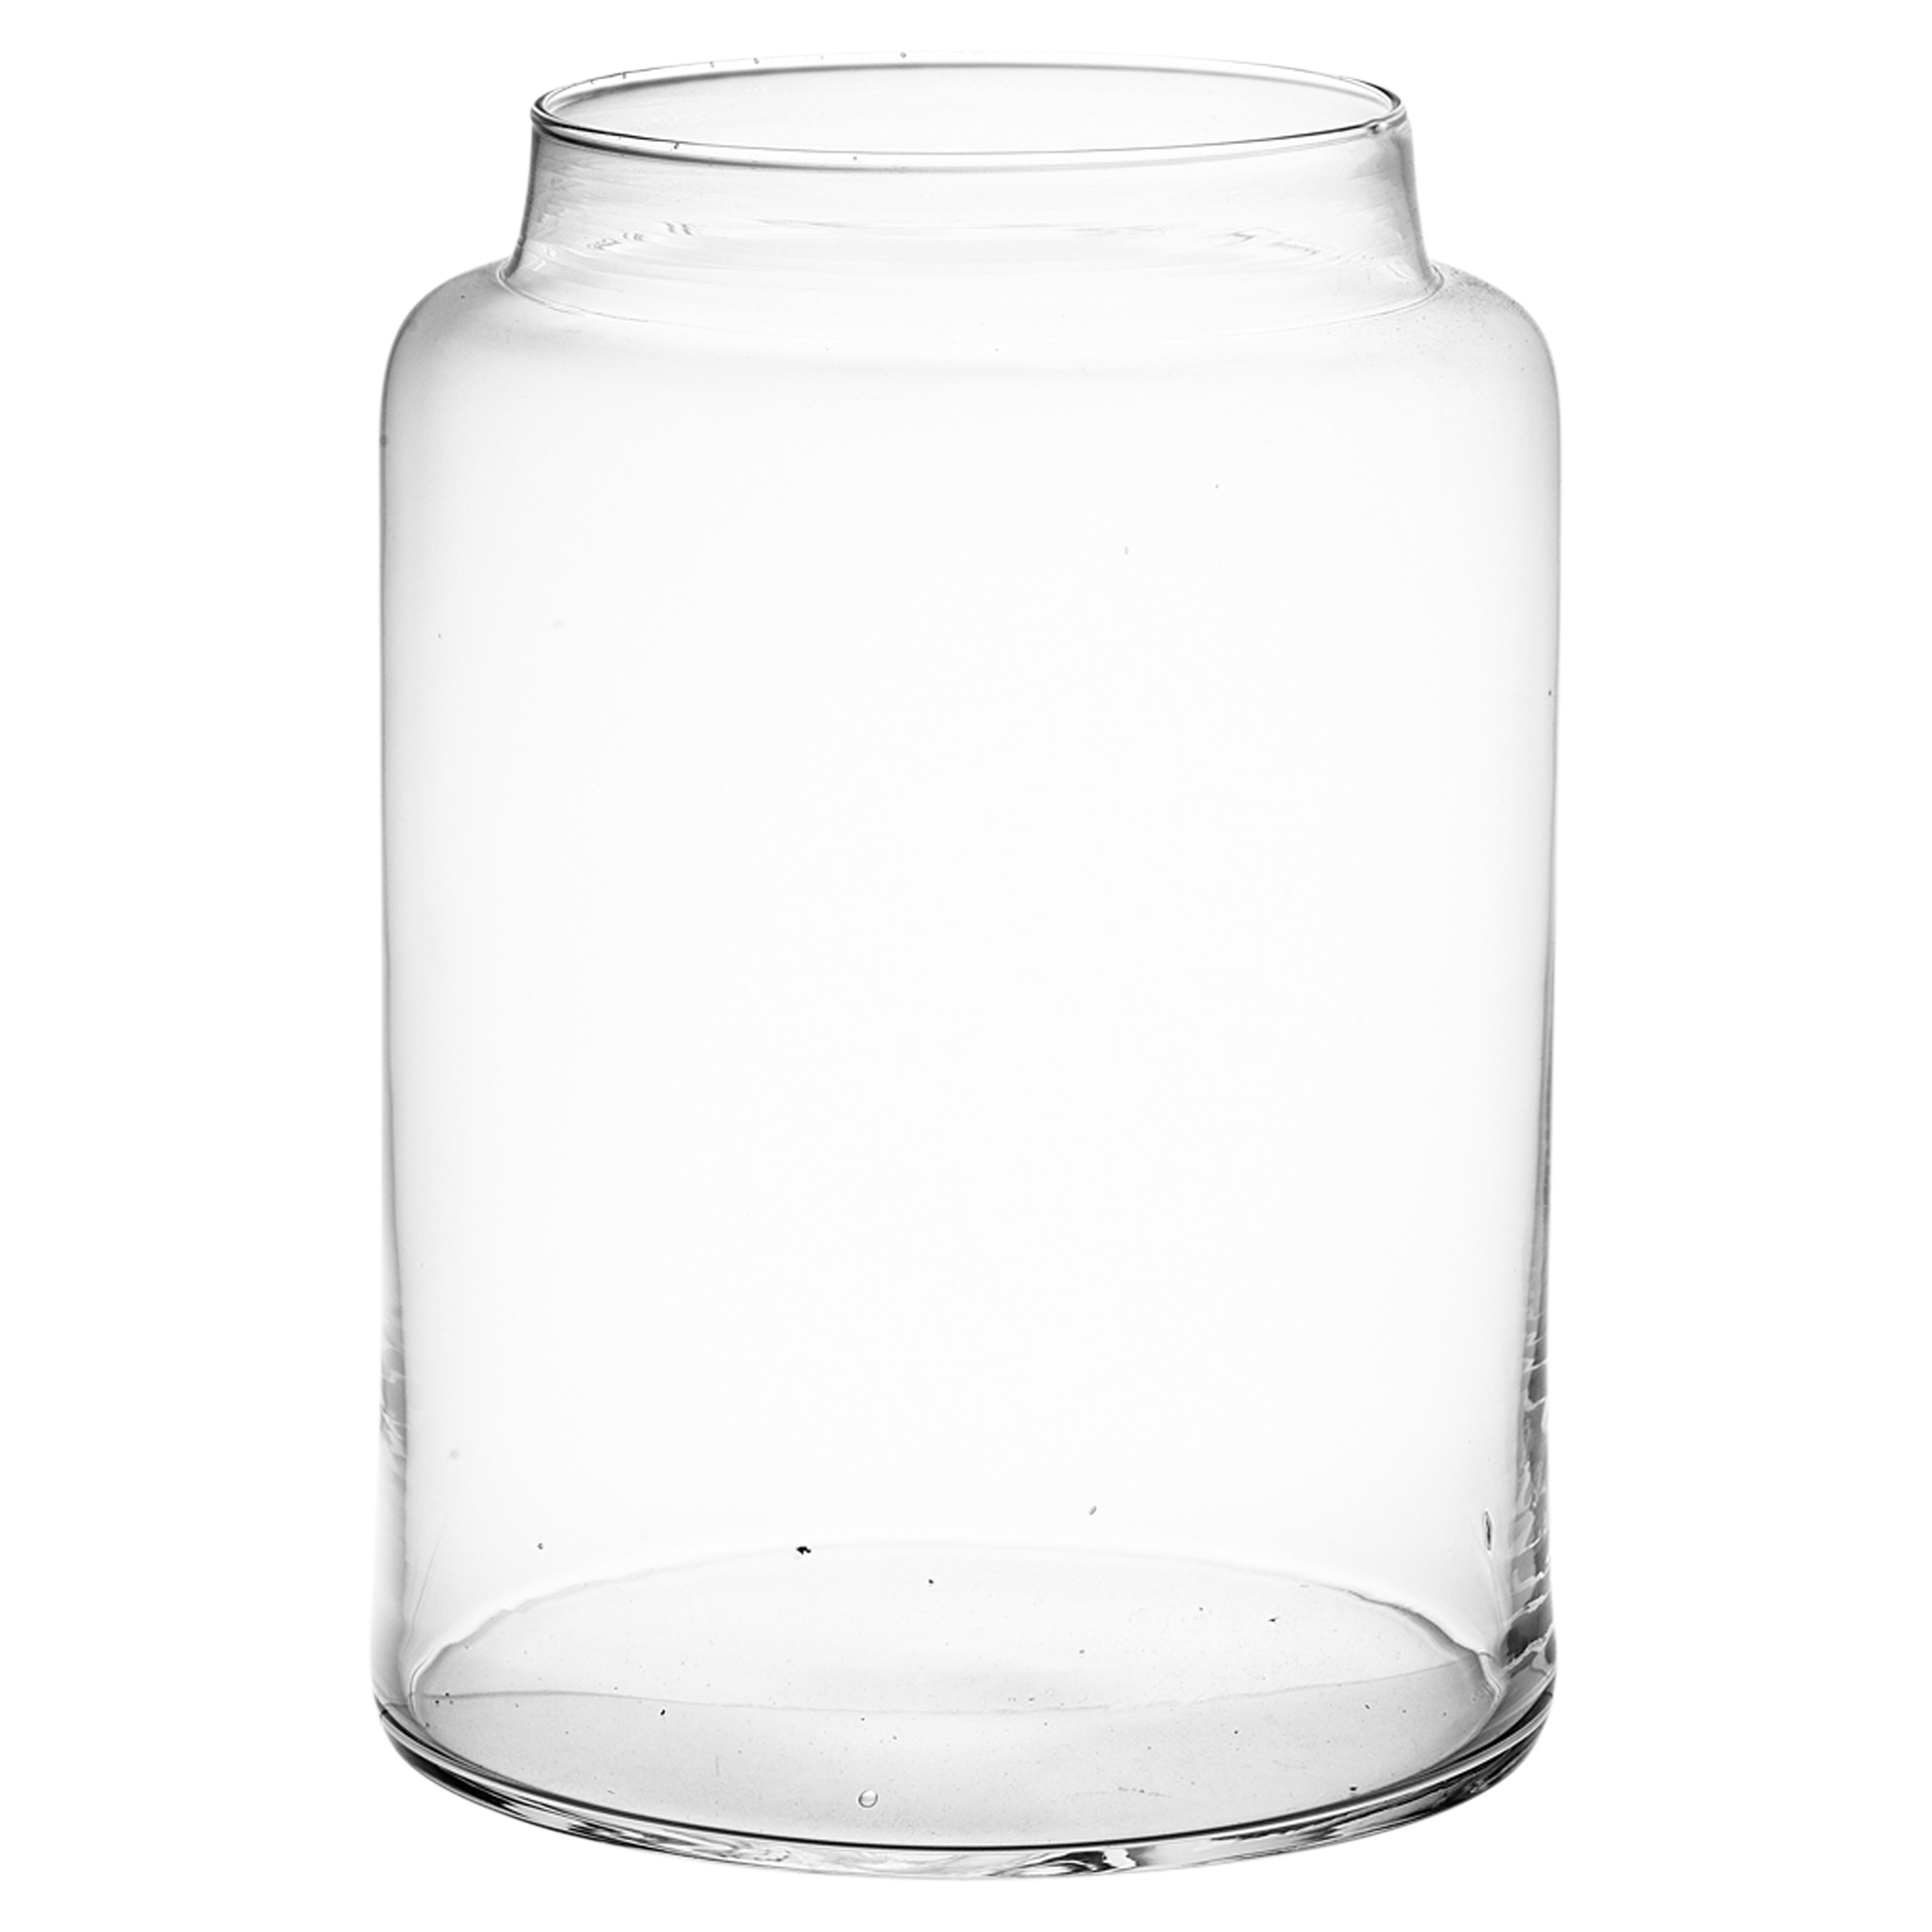 Large Clear Glass Cylinder Shaped Vases Flowers Aquarium Decorative Display Item Ebay